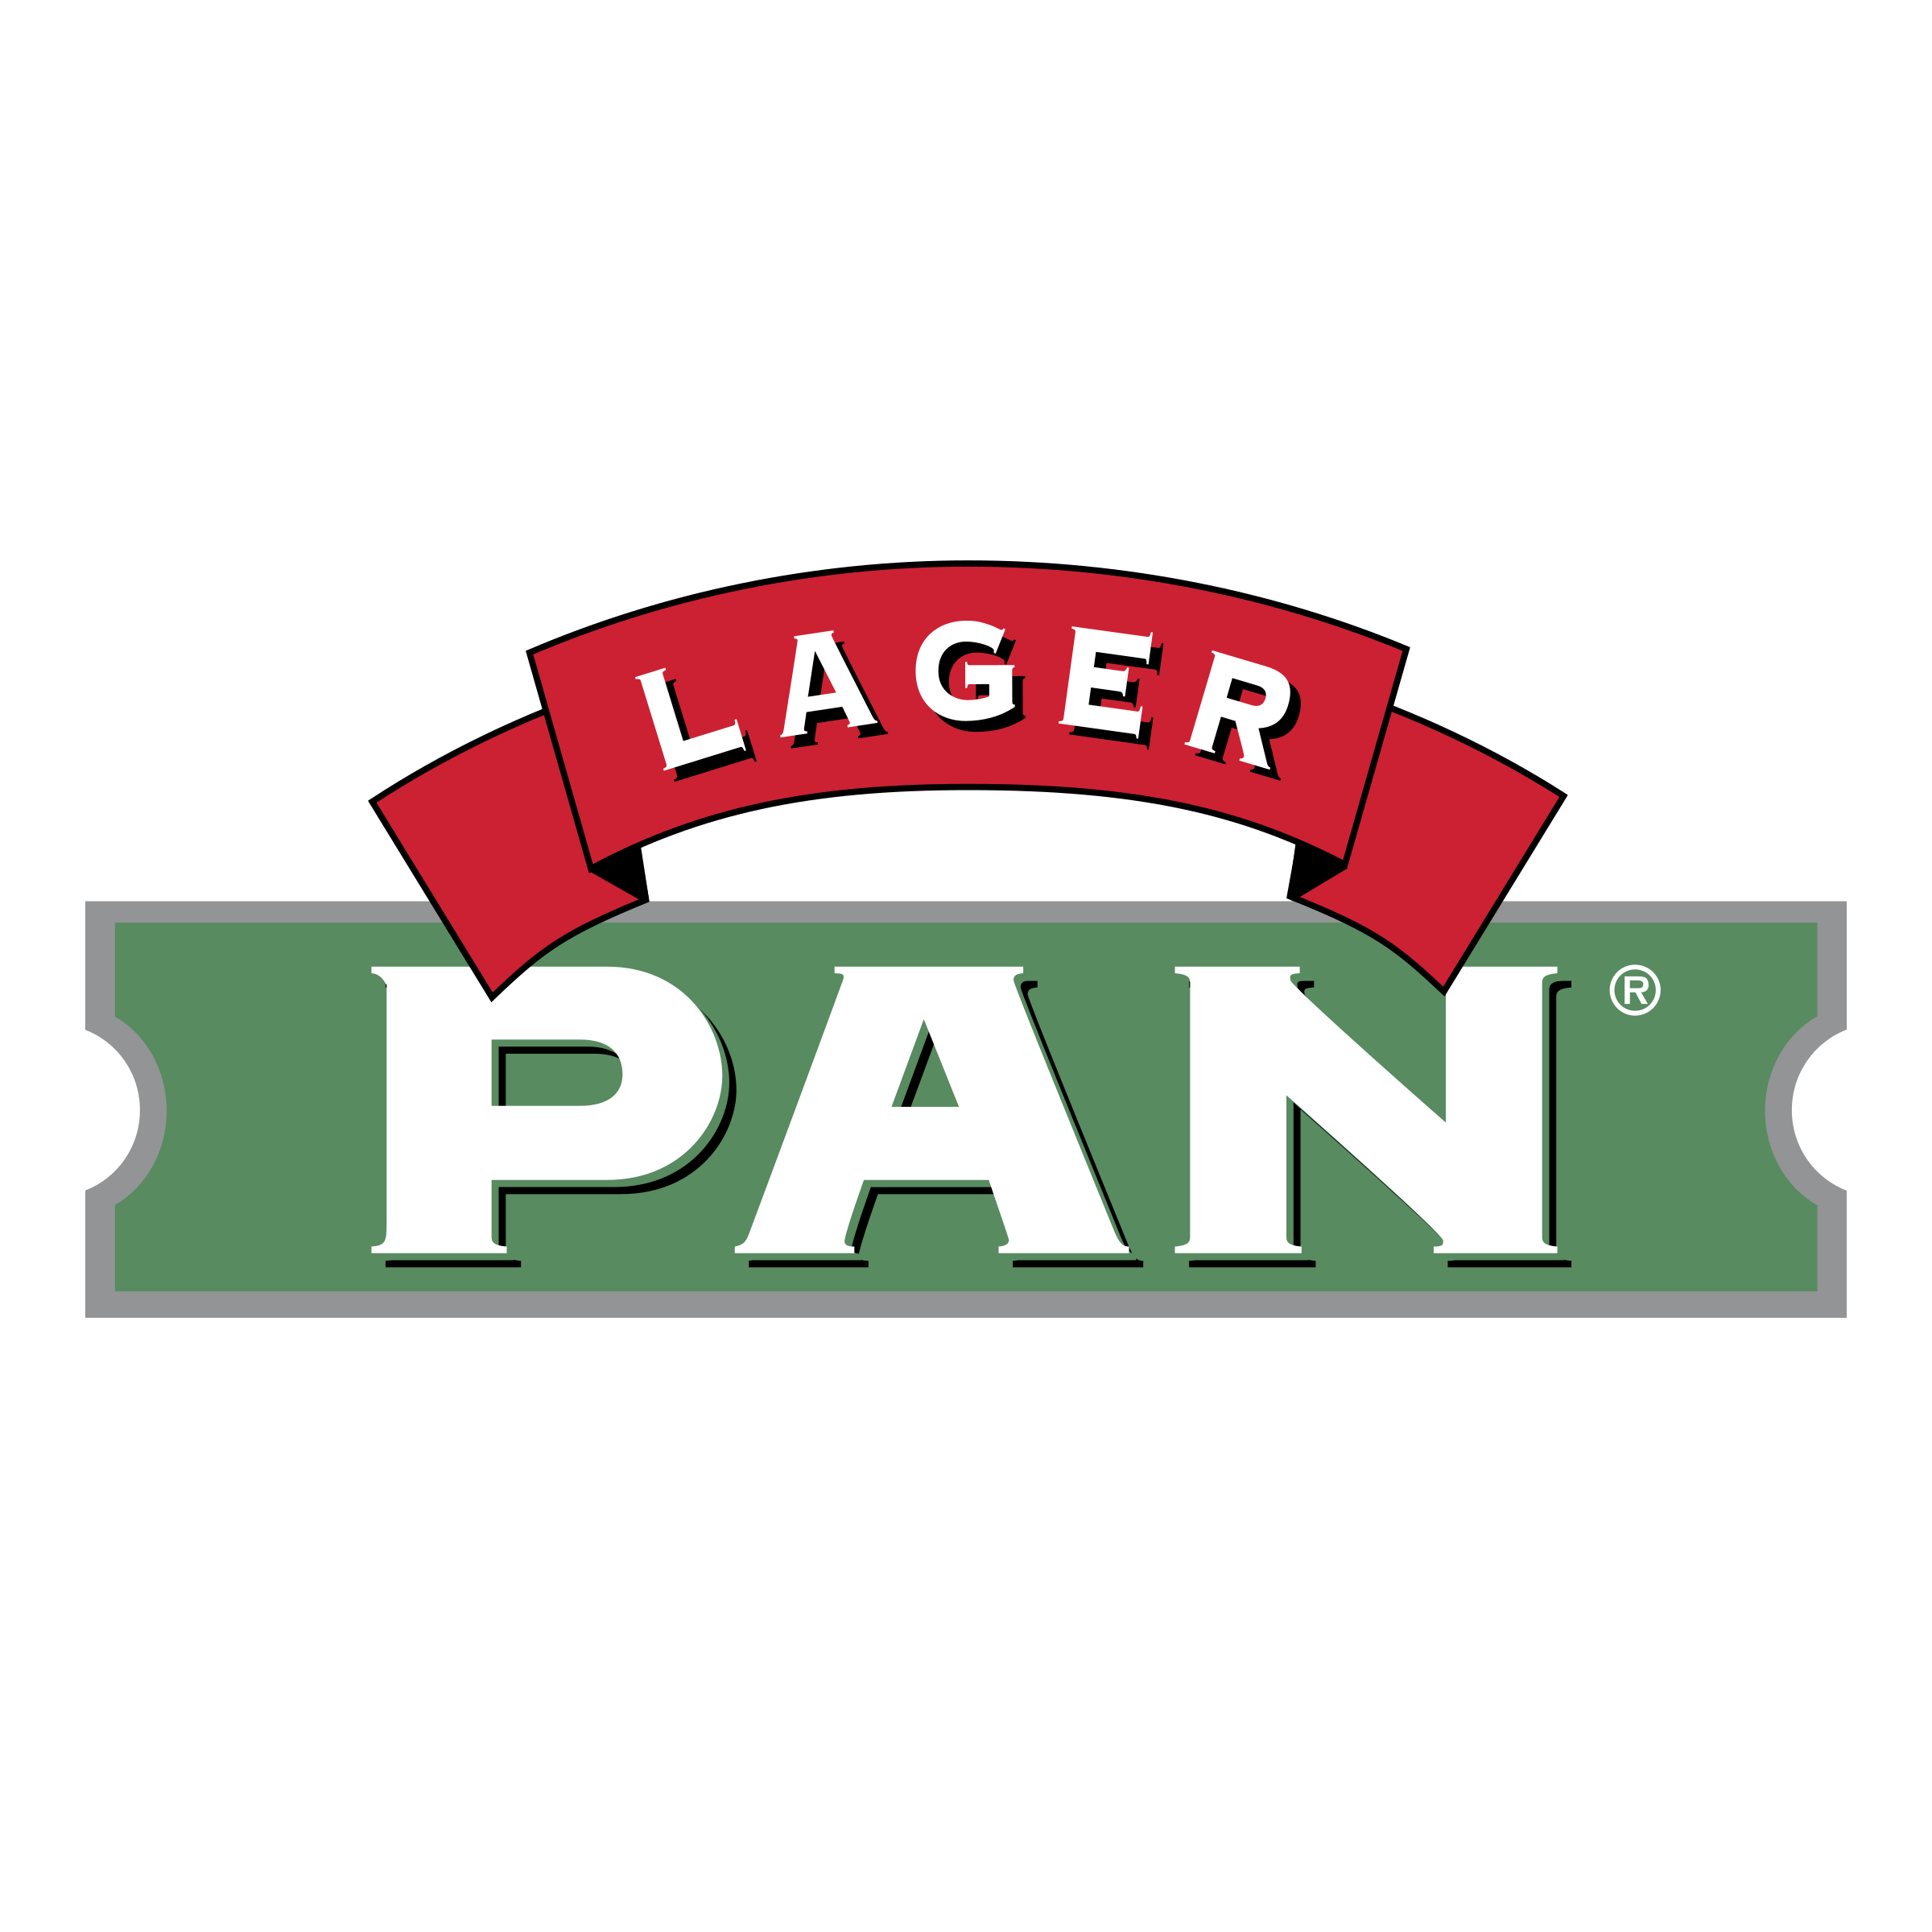 Lager Logo - Pan Lager Logo PNG Transparent & SVG Vector - Freebie Supply